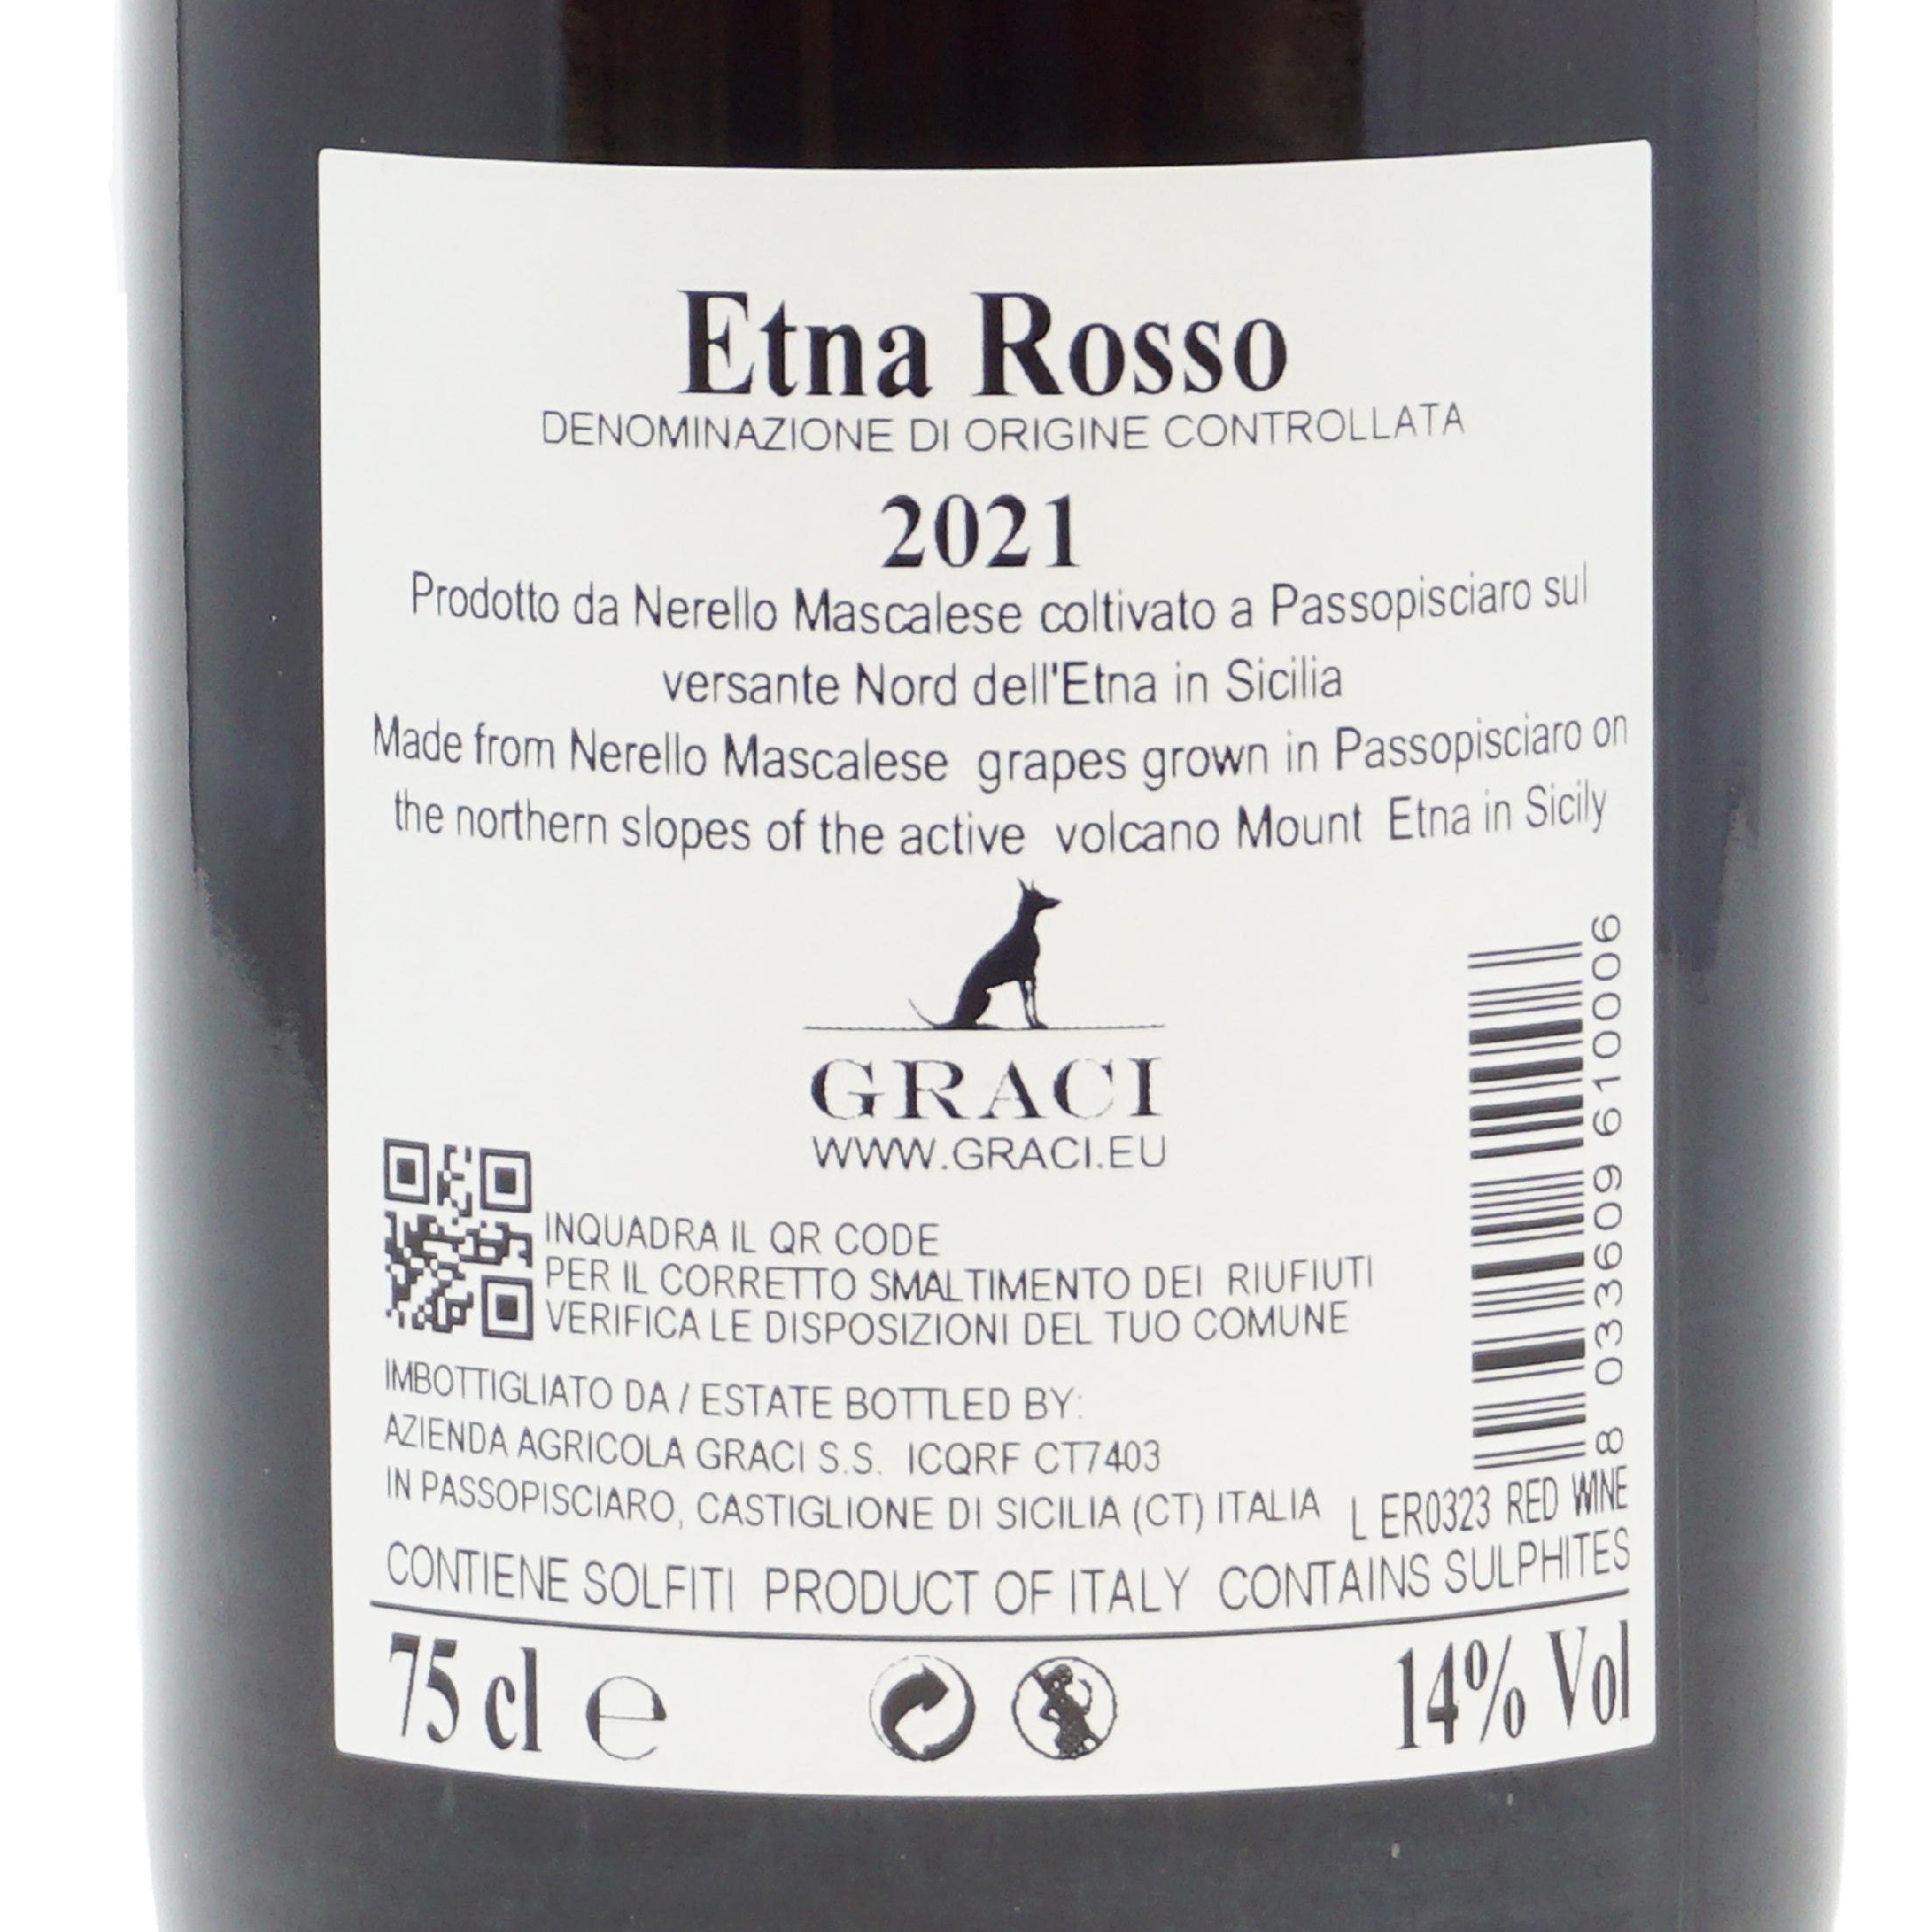 Etna Rosso 2021 Doc Graci lt.0.750